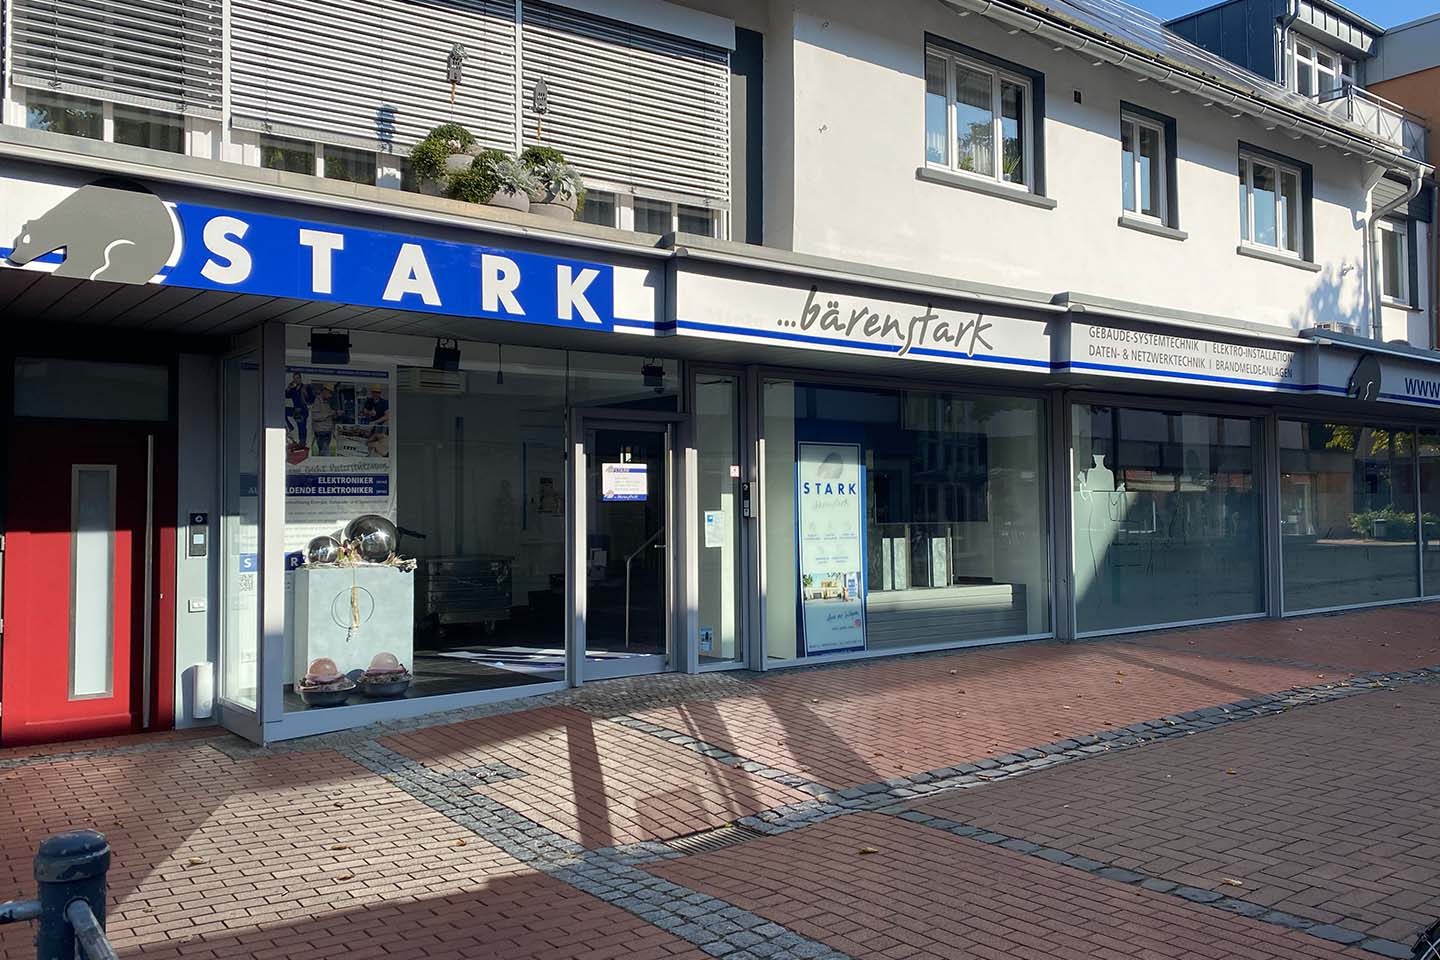 Stark GmbH